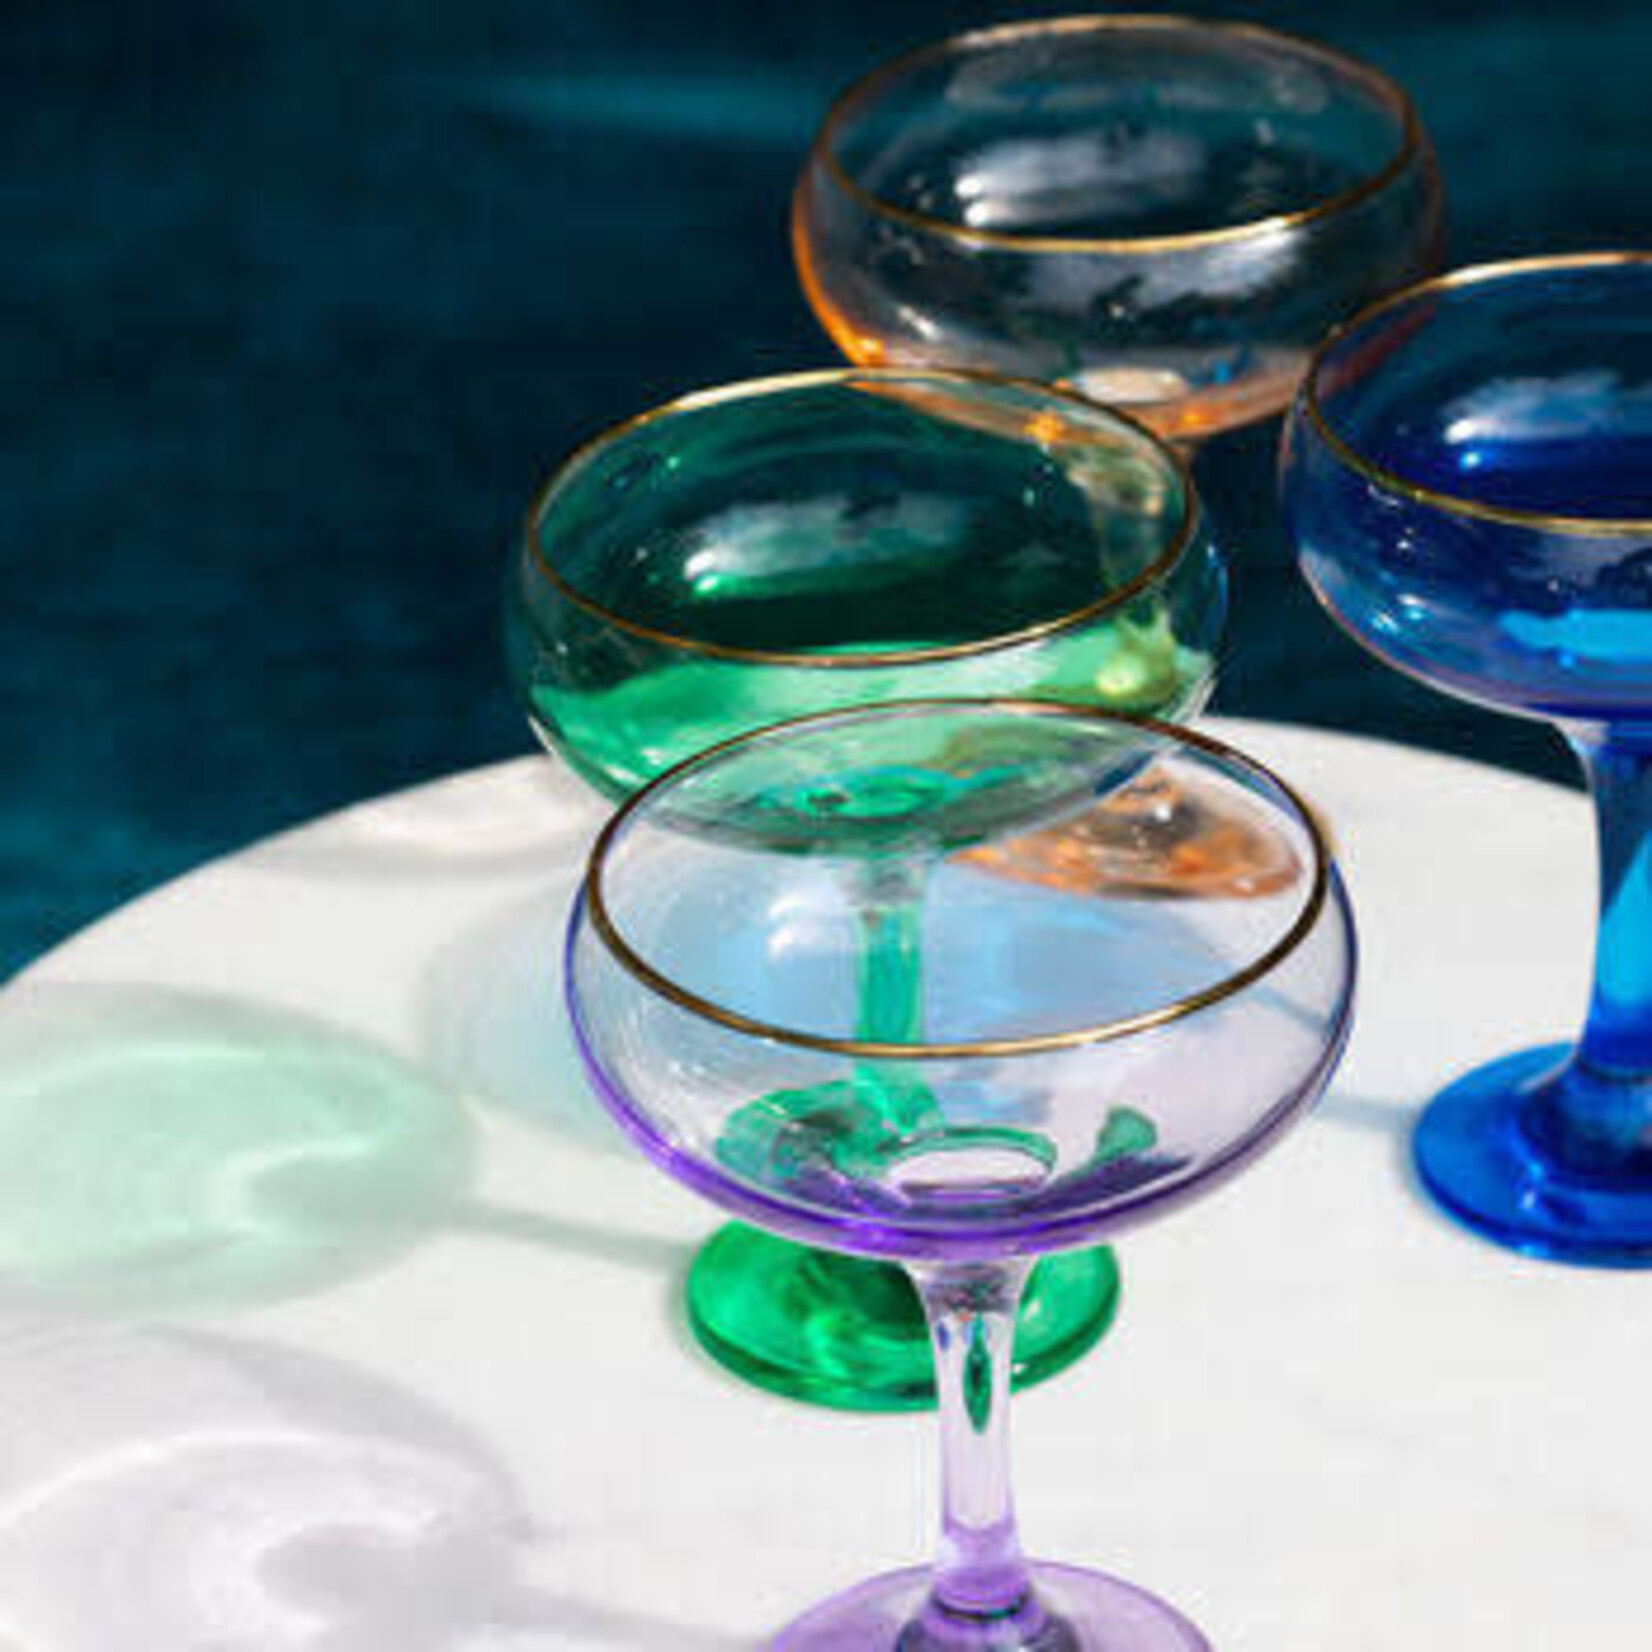 VIETRI Rainbow Jewel Tone Assorted Coupe Champagne Glasses - Set of 4